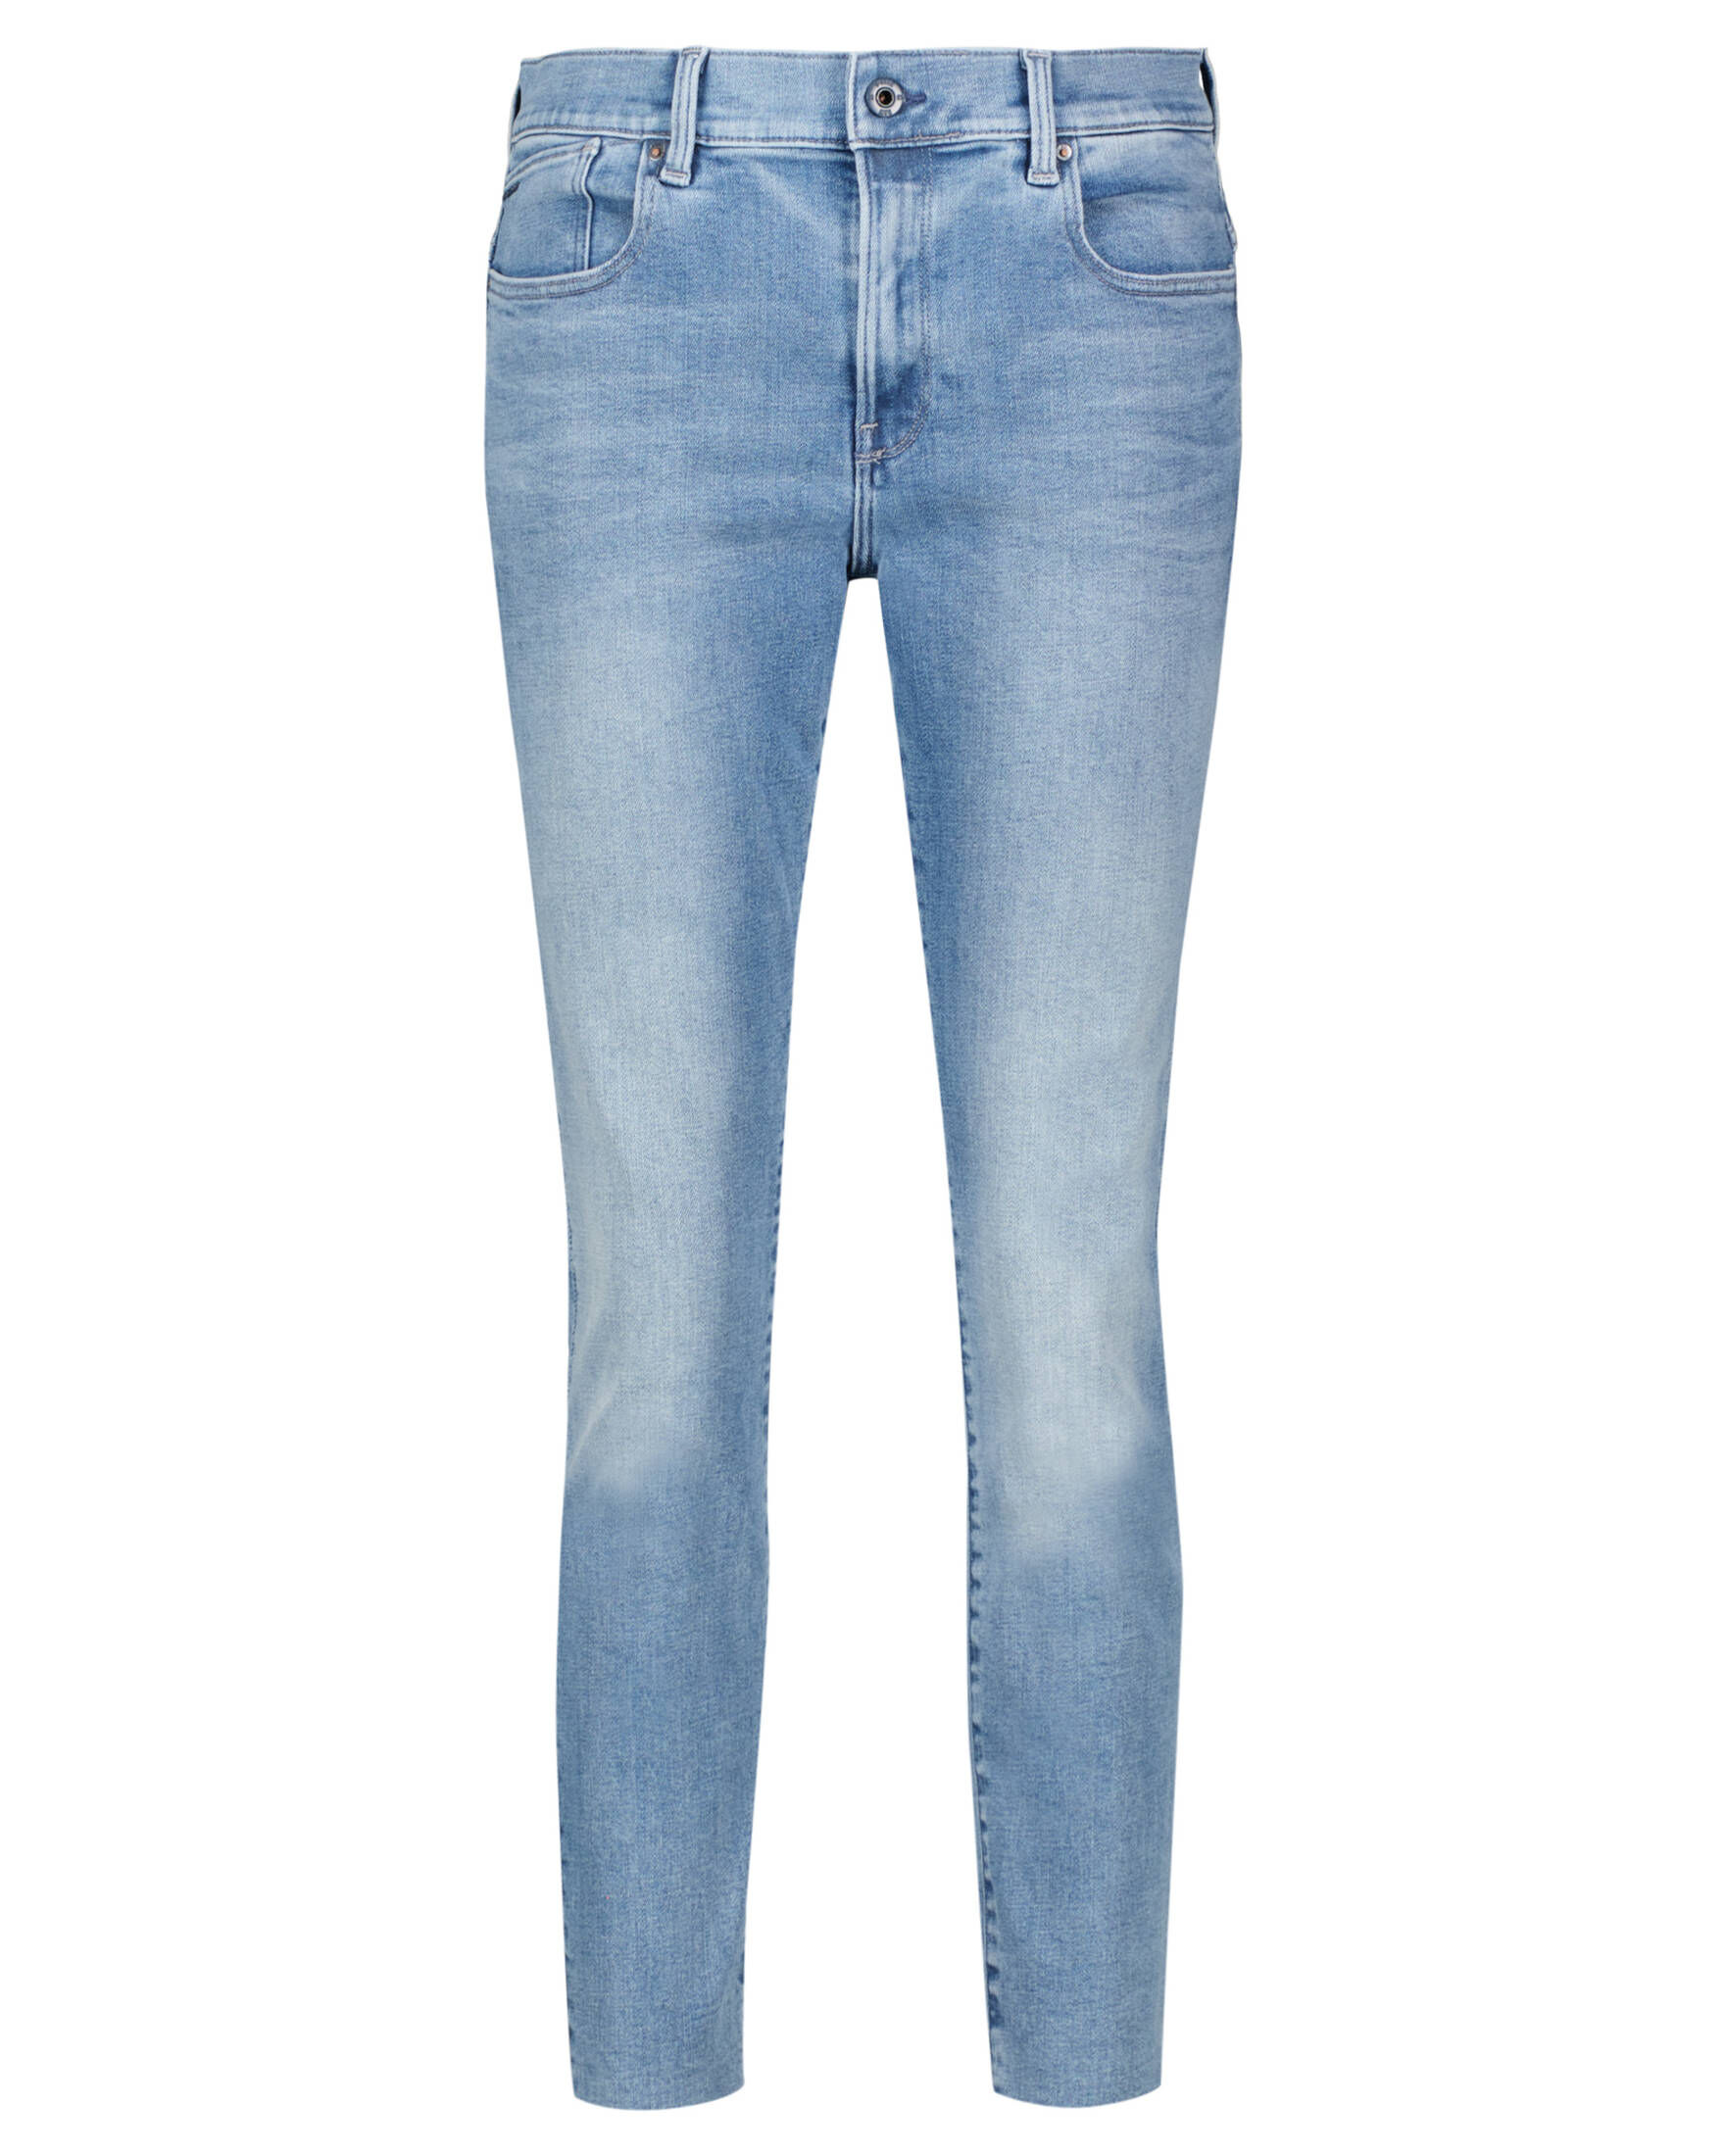 G-Star RAW Damen Jeans LHANA Skinny Fit kaufen | engelhorn